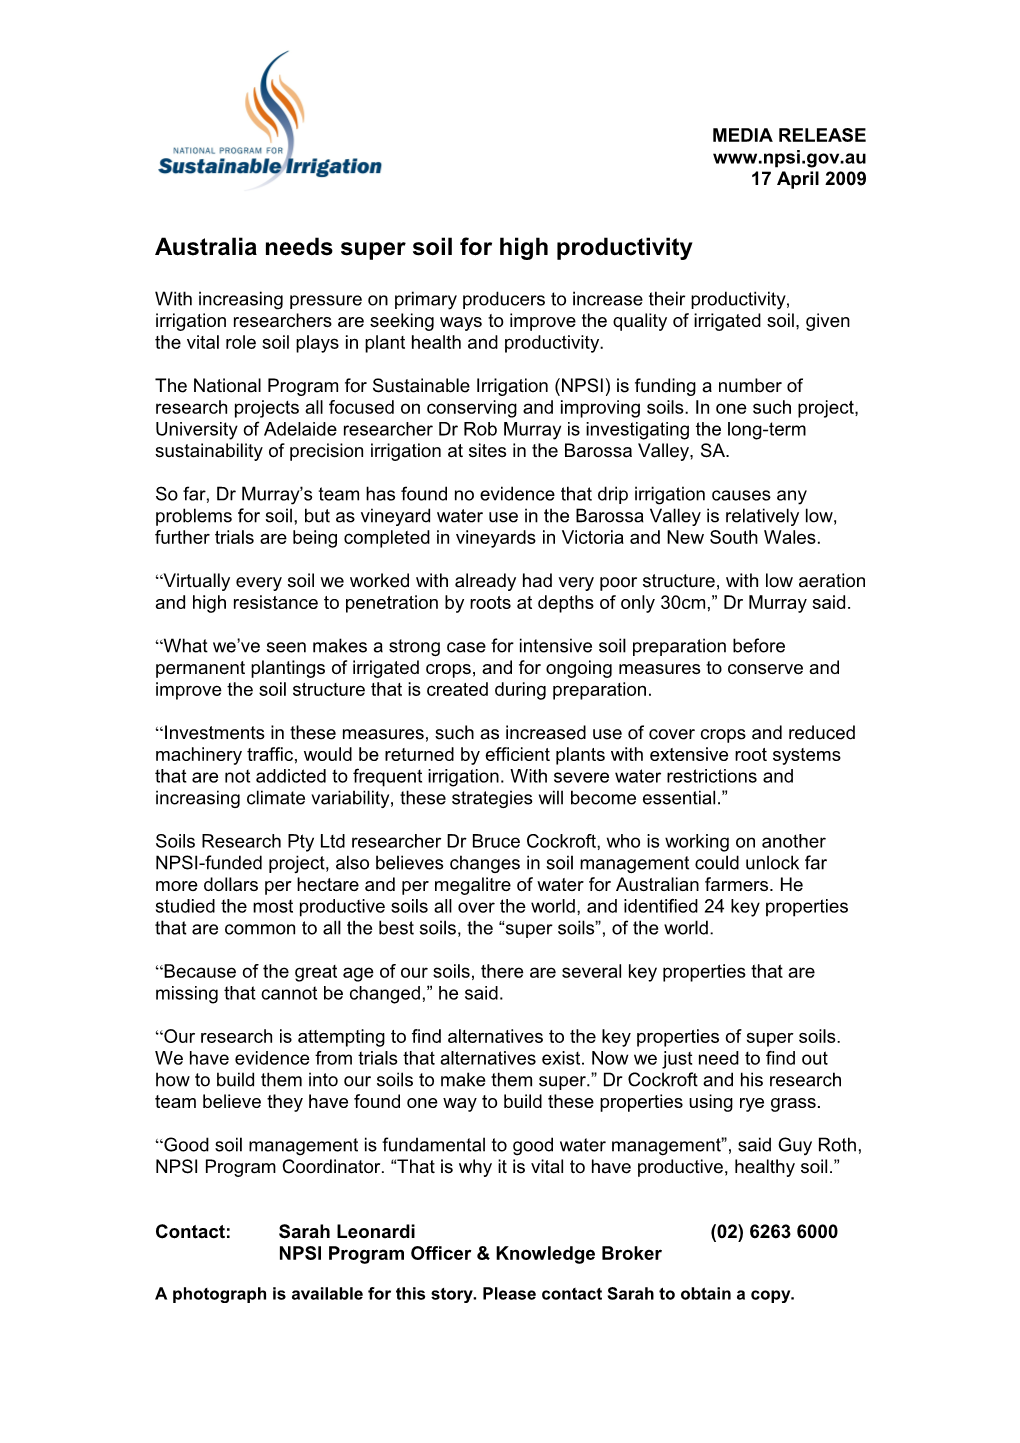 Australia Needs Super Soil for High Productivity